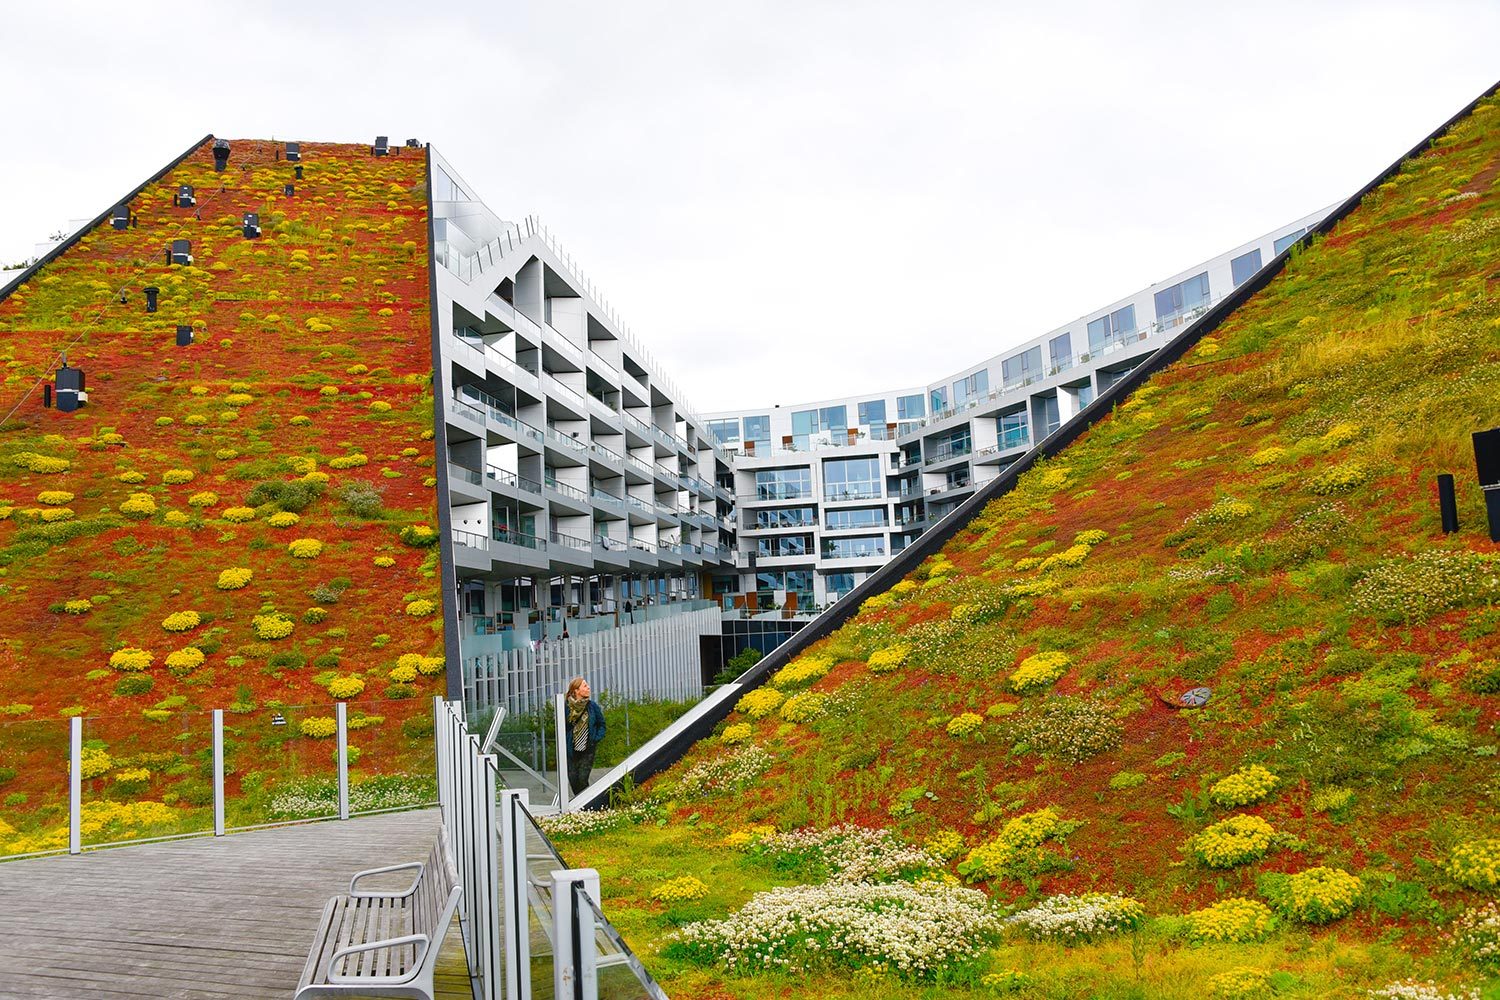 Bjarke Ingels' BIG Architecture in Denmark. Read More - http://www.visitdenmark.com/denmark/8tallet-gdk539319